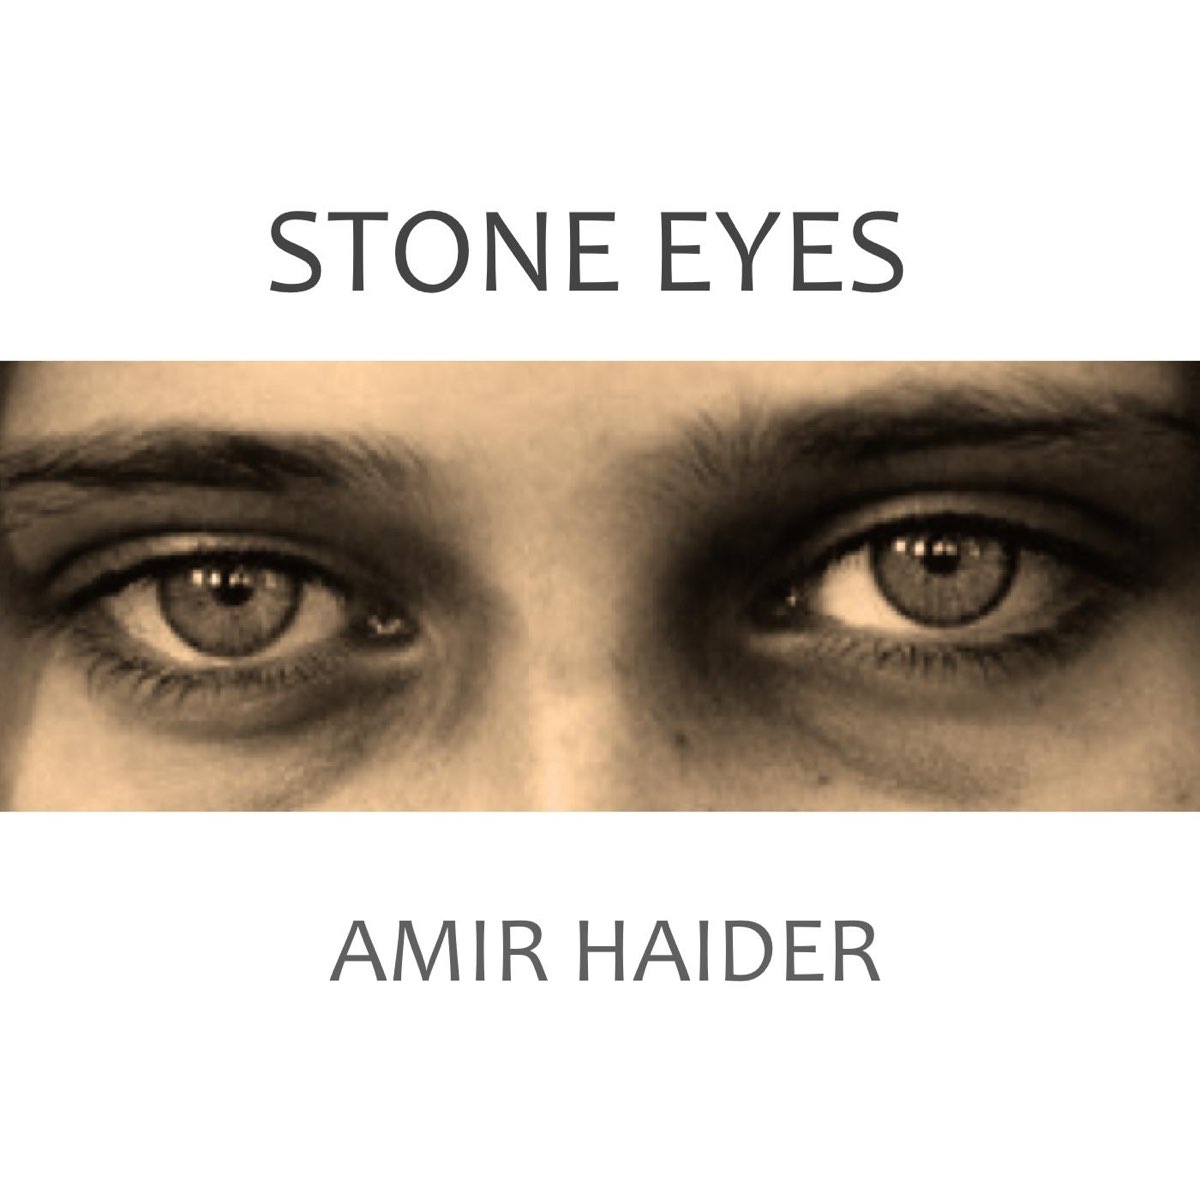 Stone eyes. Eye Stone. Stone with Eyes. Red Eyes обложки муз альбомов.